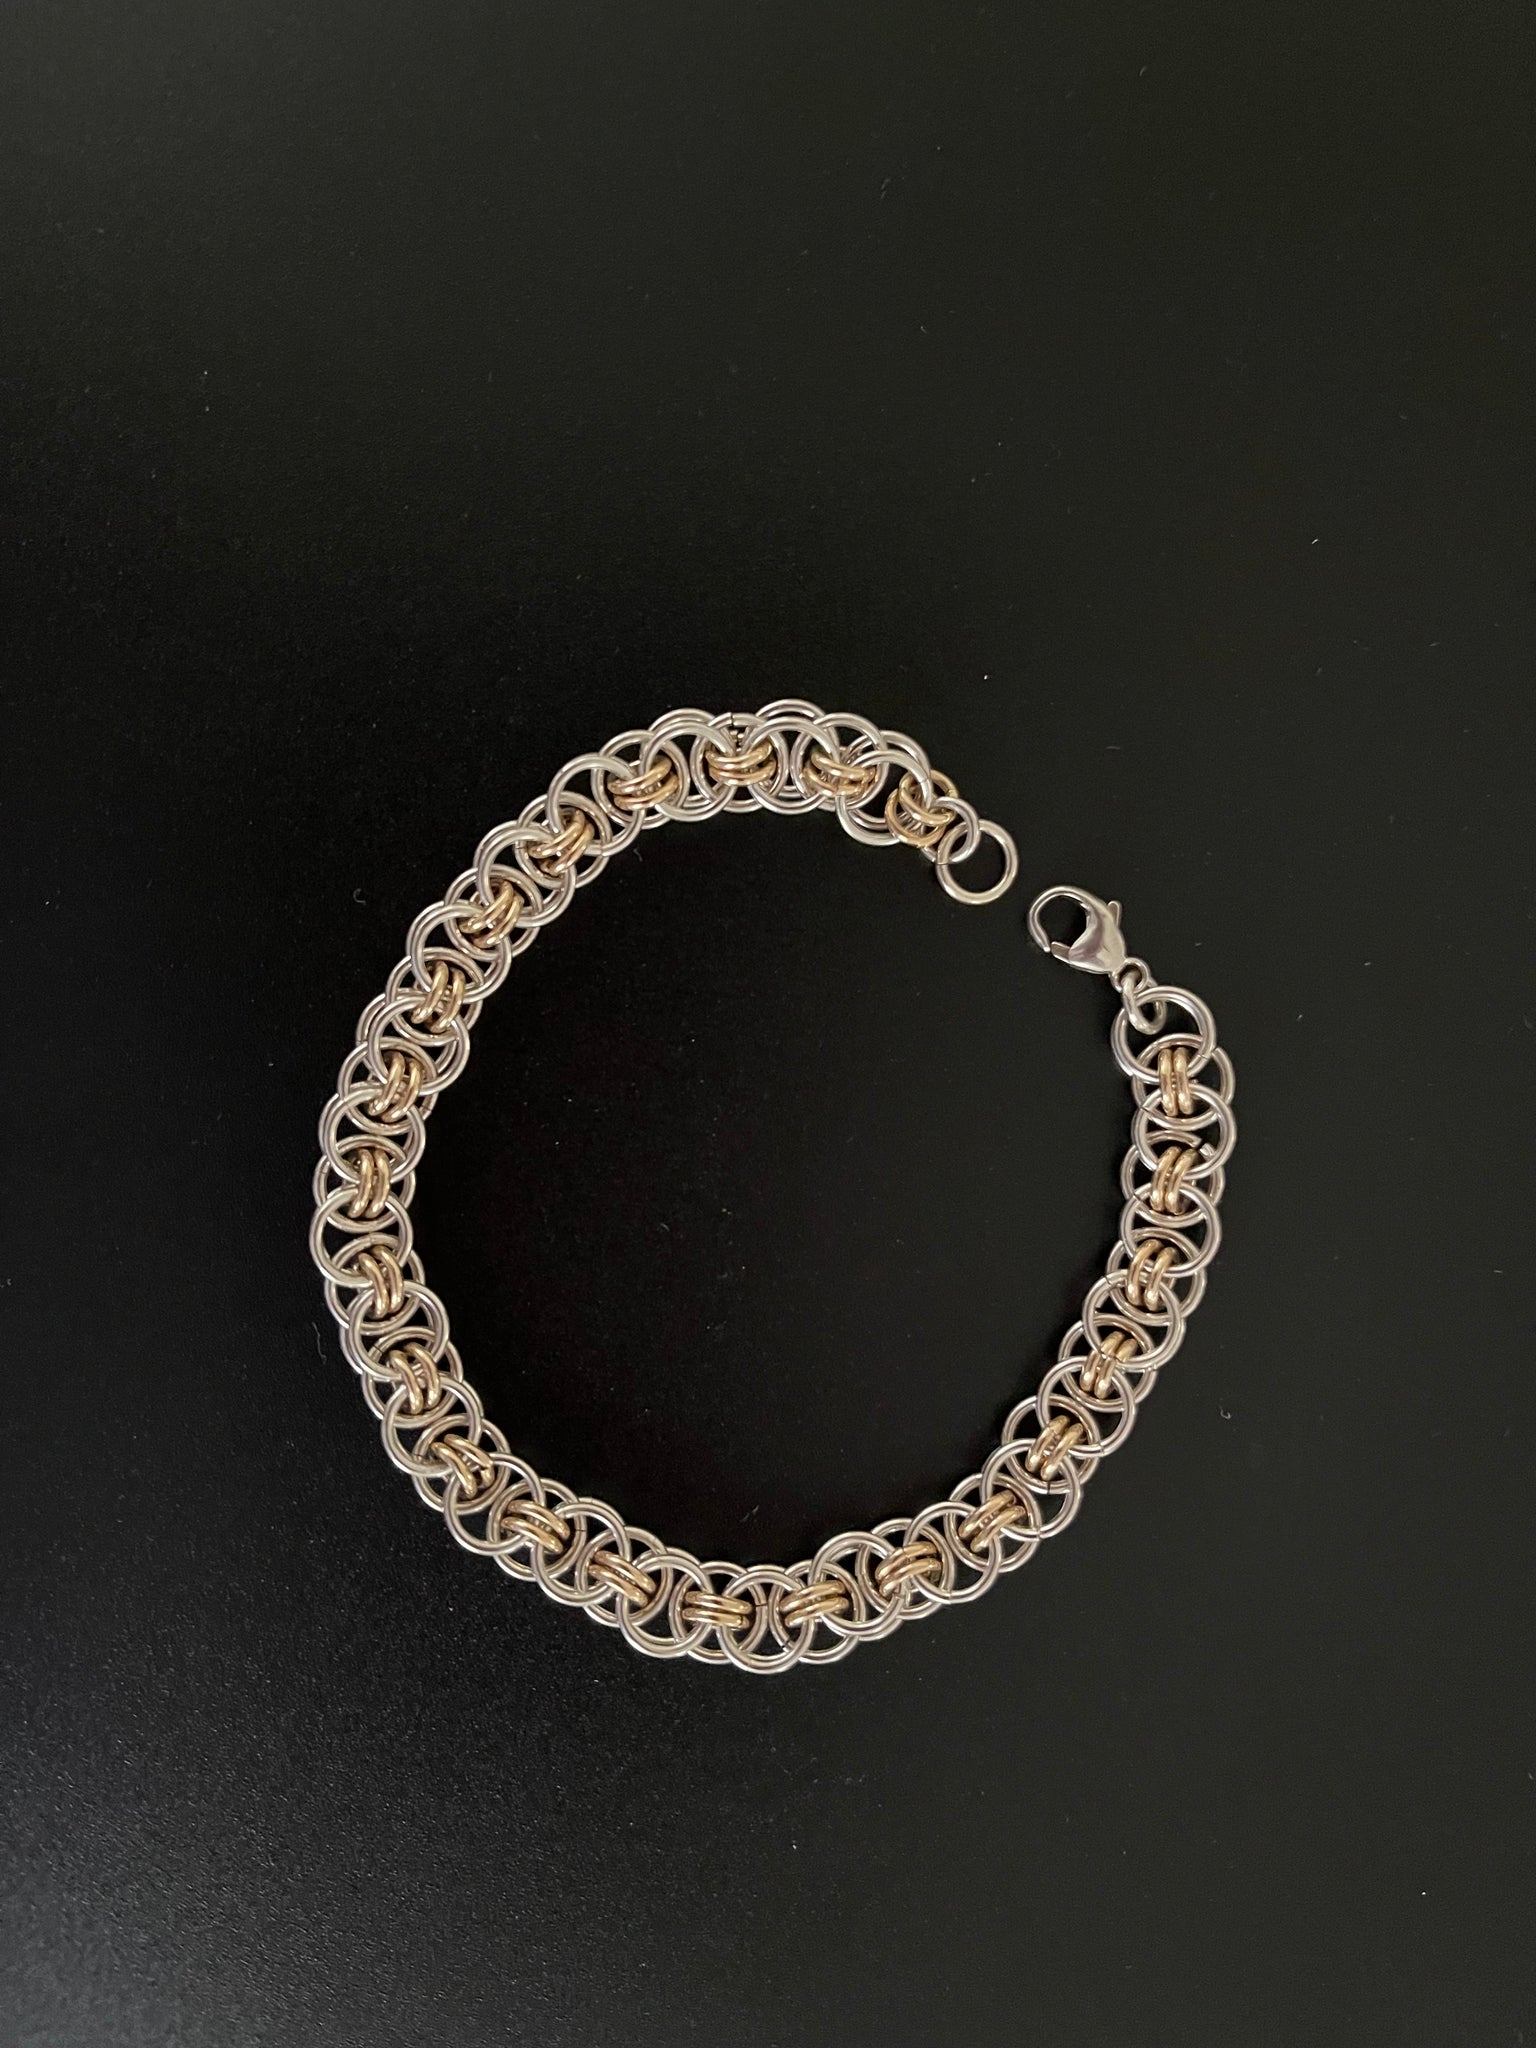 Umilele Chain Link Bracelet